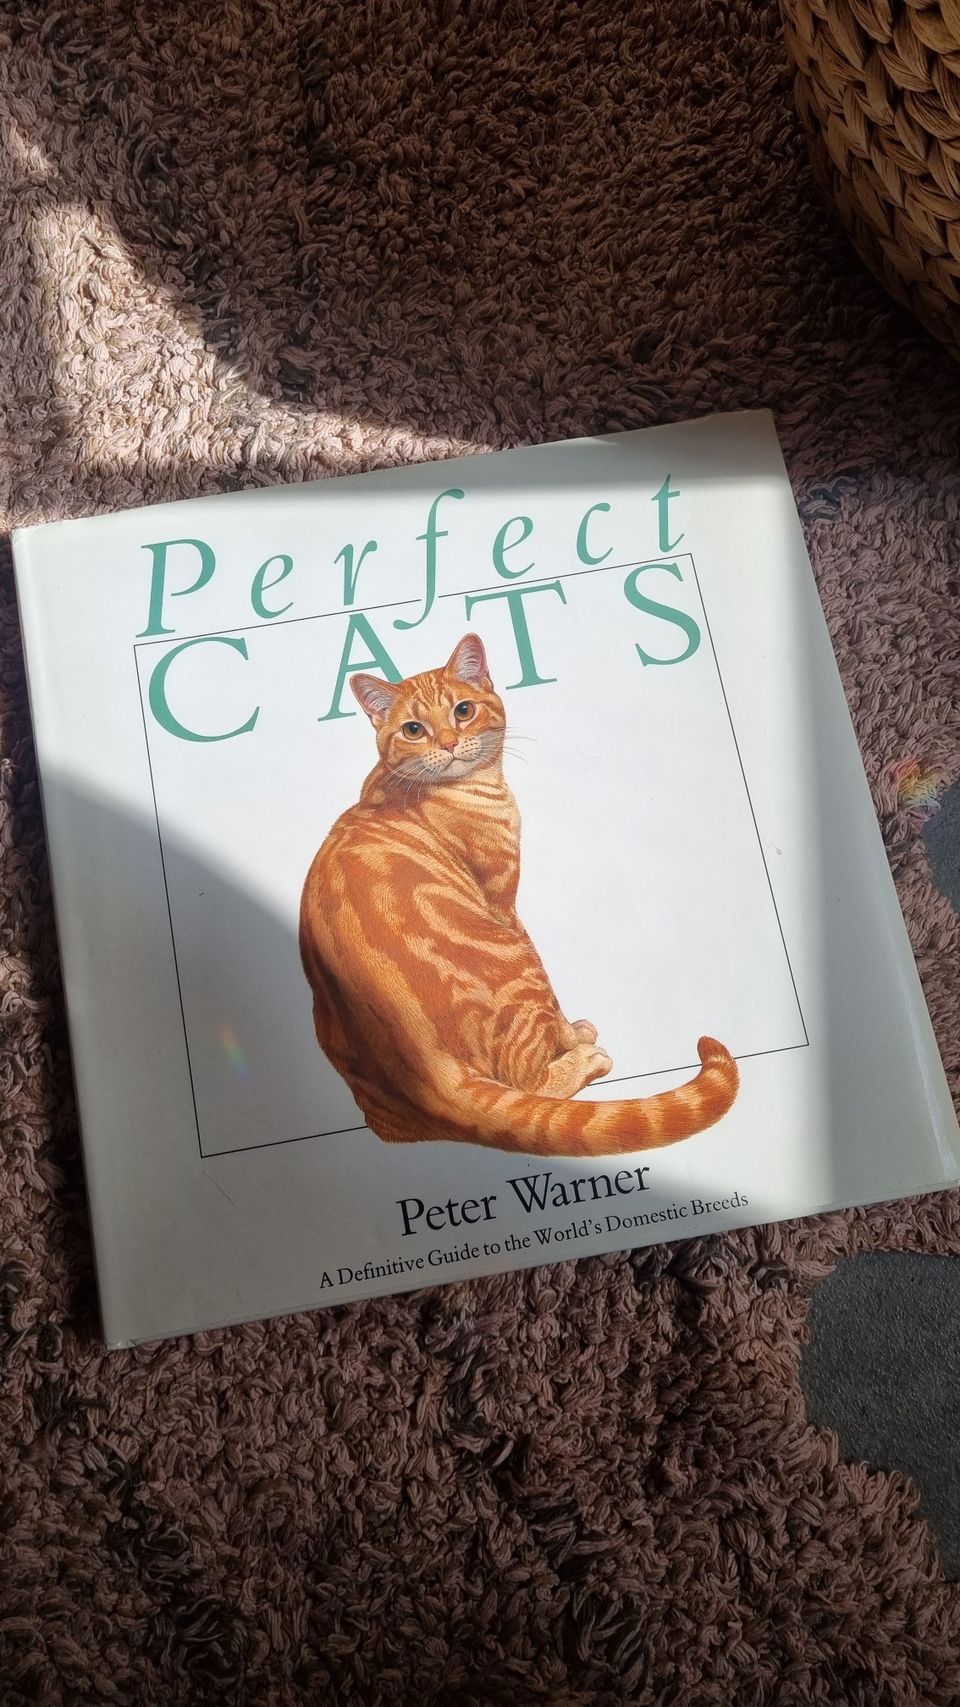 Peter Warner: Perfect cats